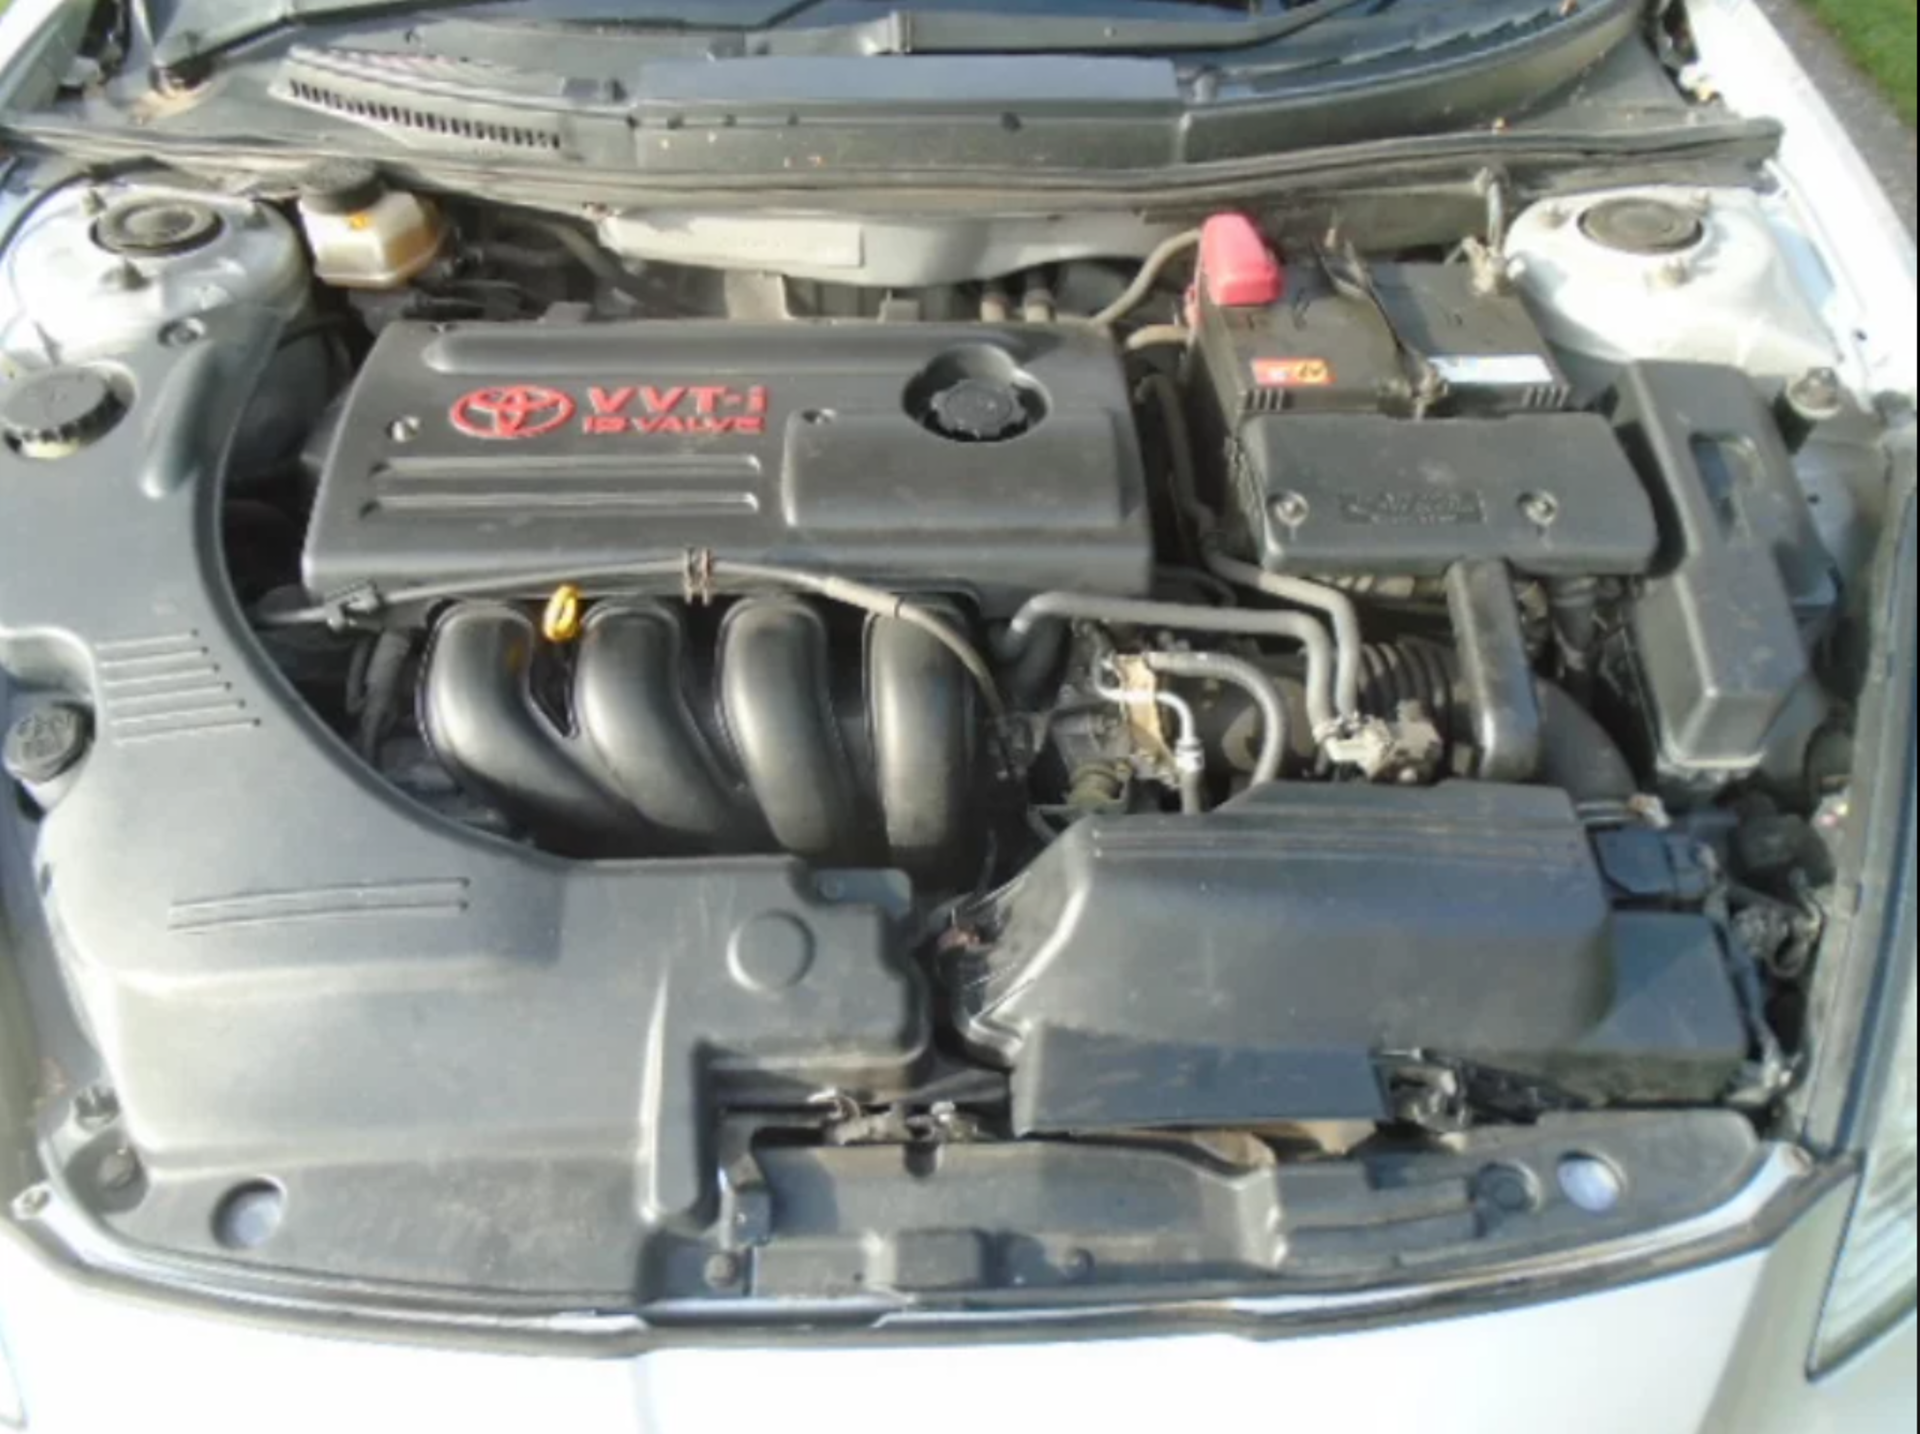 2001 Toyota Celica 1.8 VVTI - Image 2 of 6